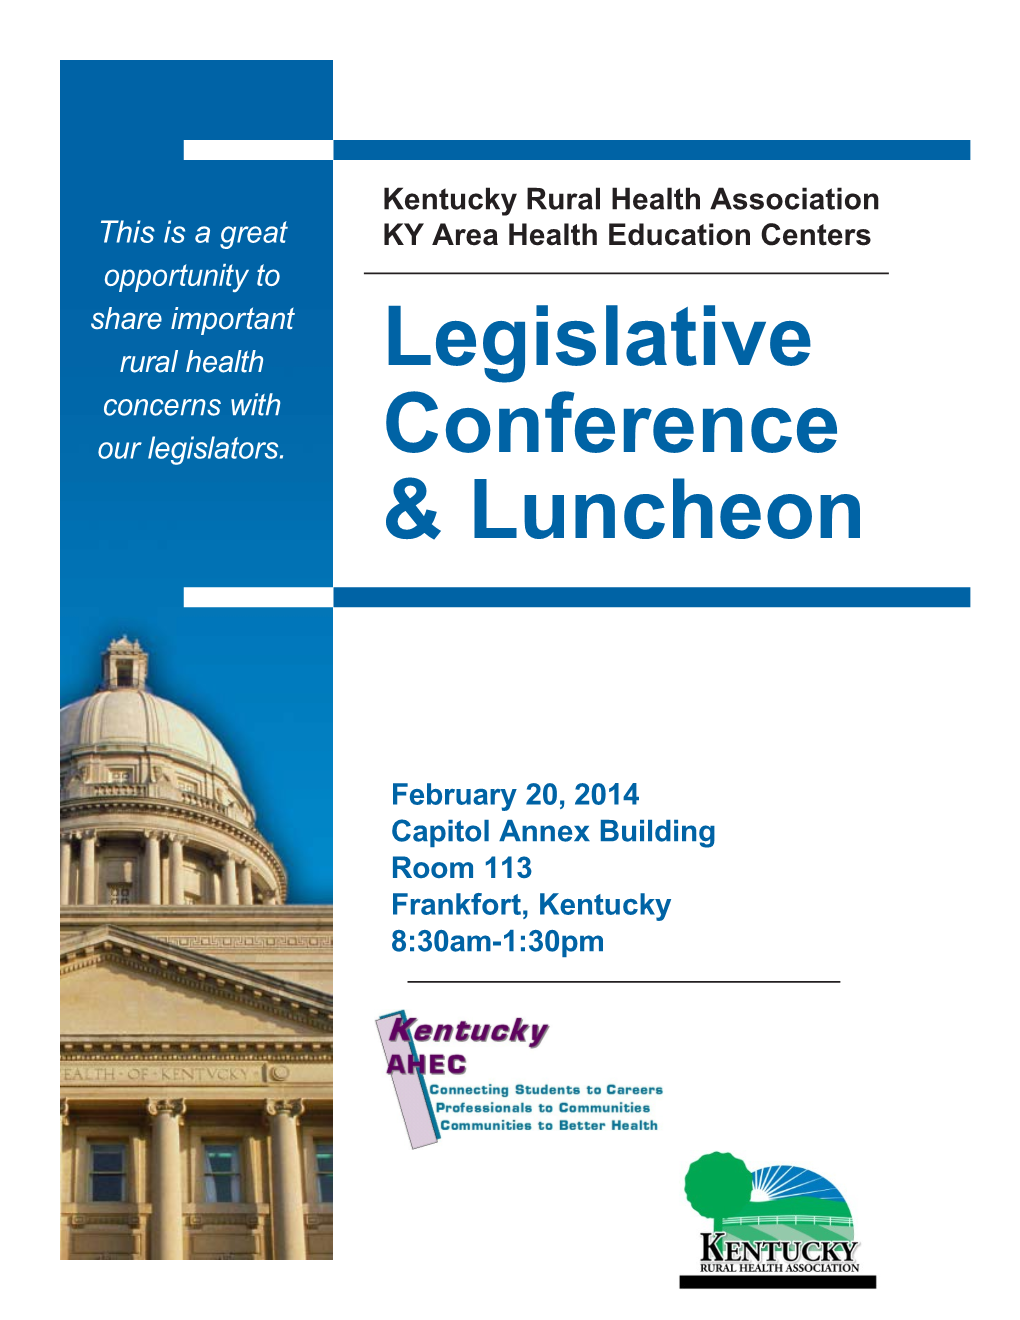 Kentucky Rural Health Association Legislative Conference.Pmd